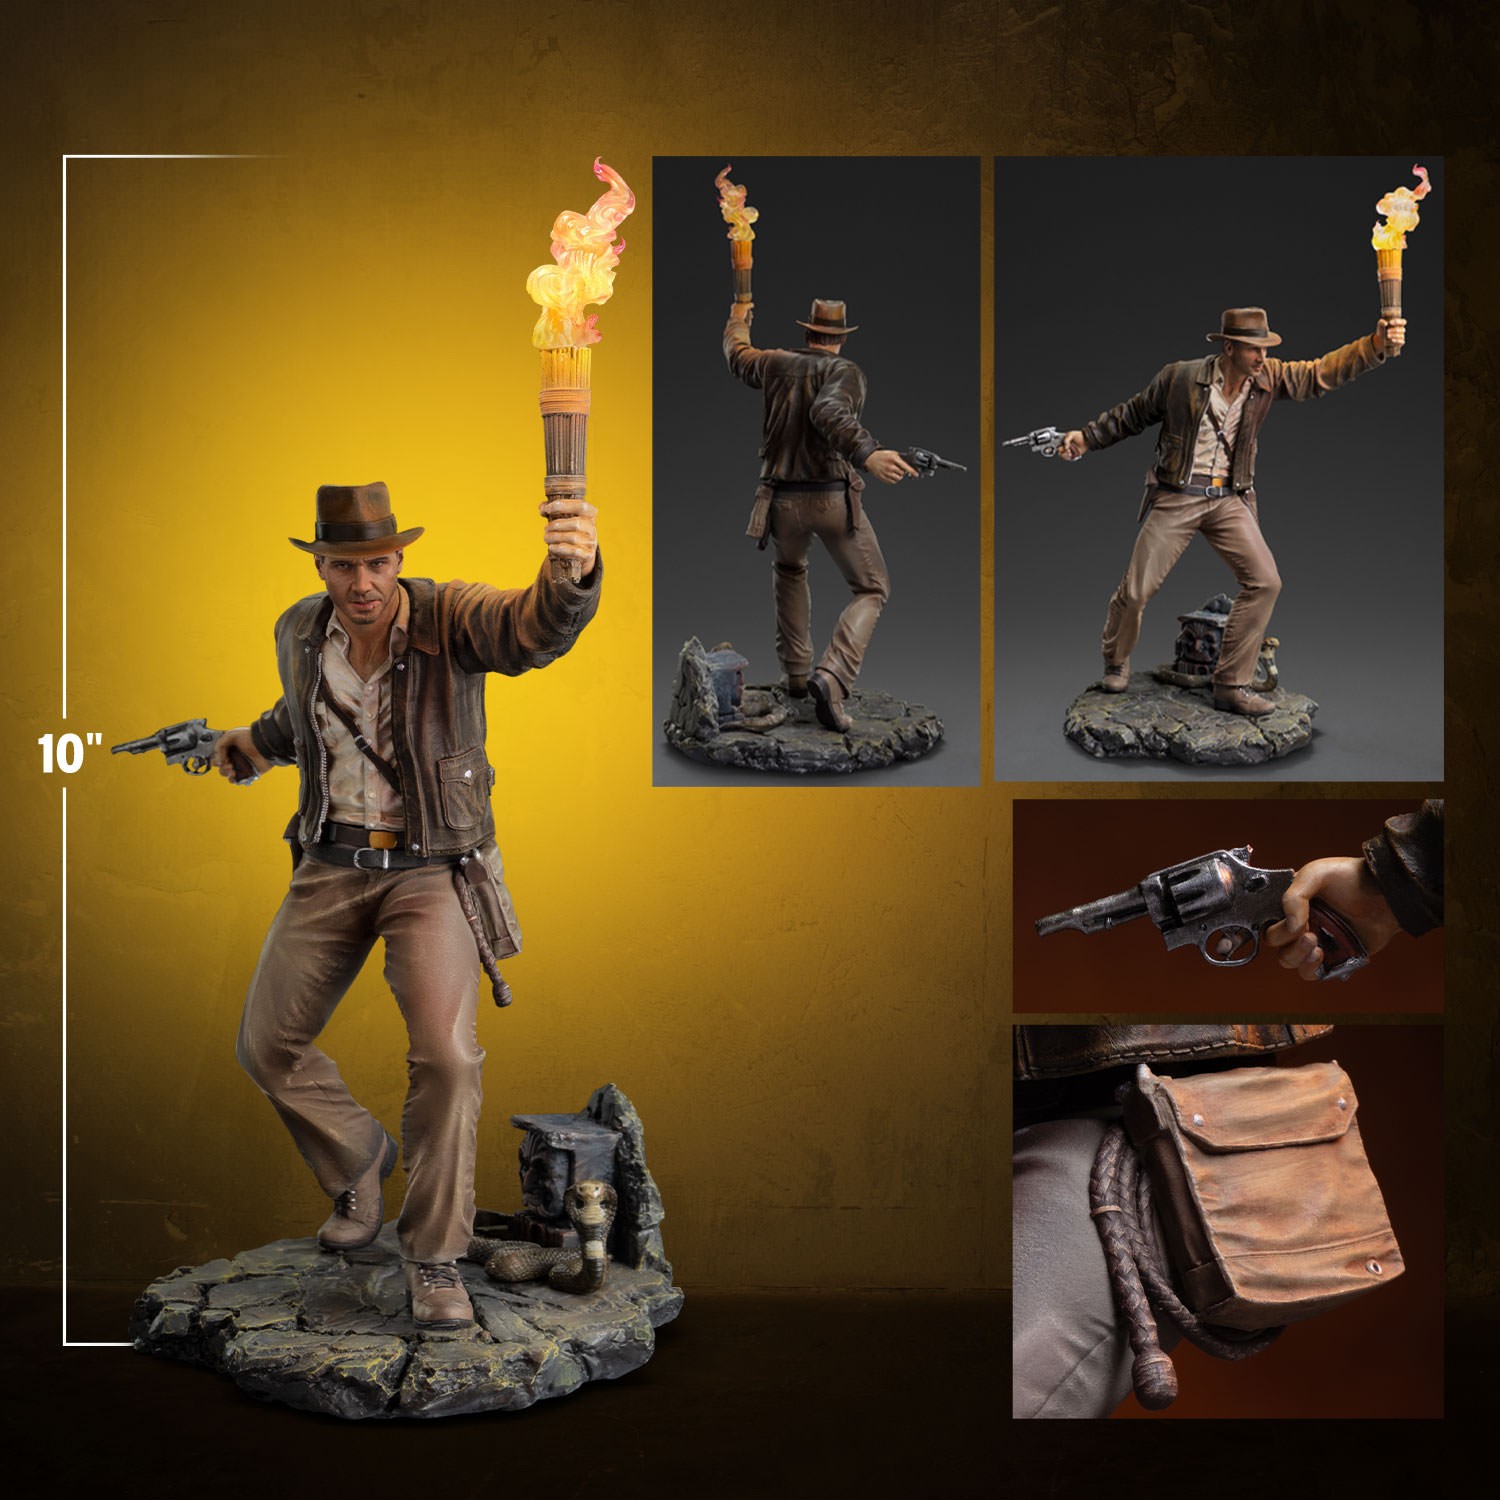 Indiana Jones Collector Edition (Prototype Shown) View 2